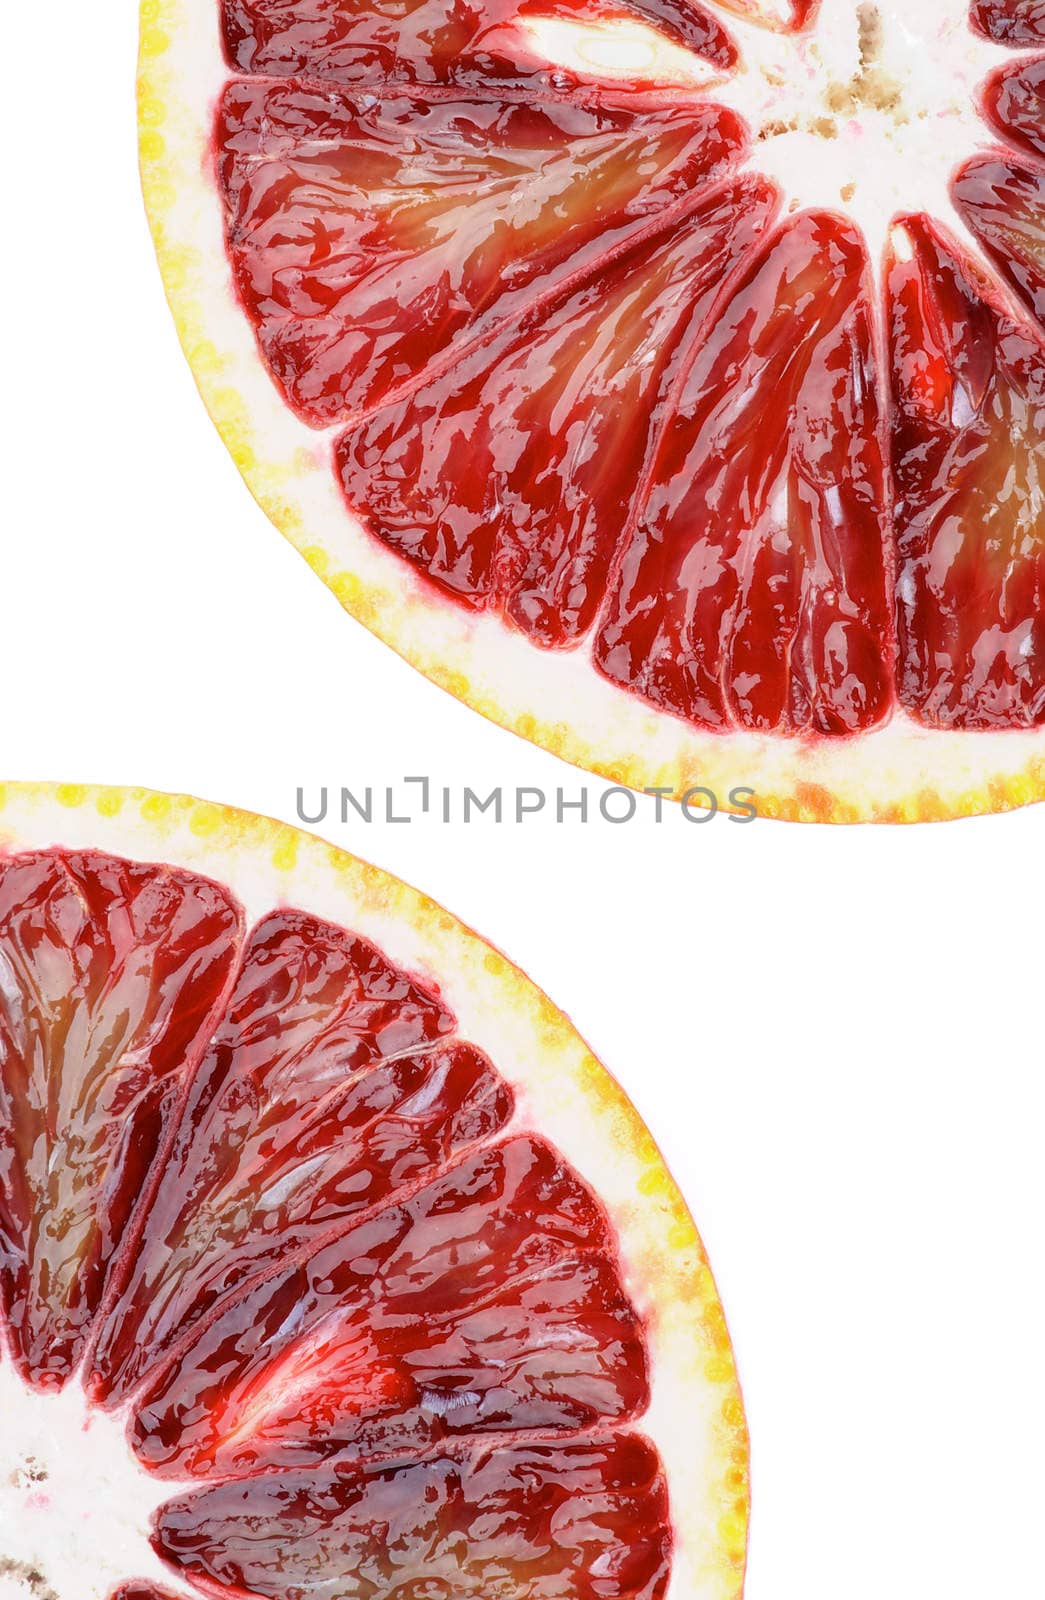 Slices of Blood Oranges by zhekos